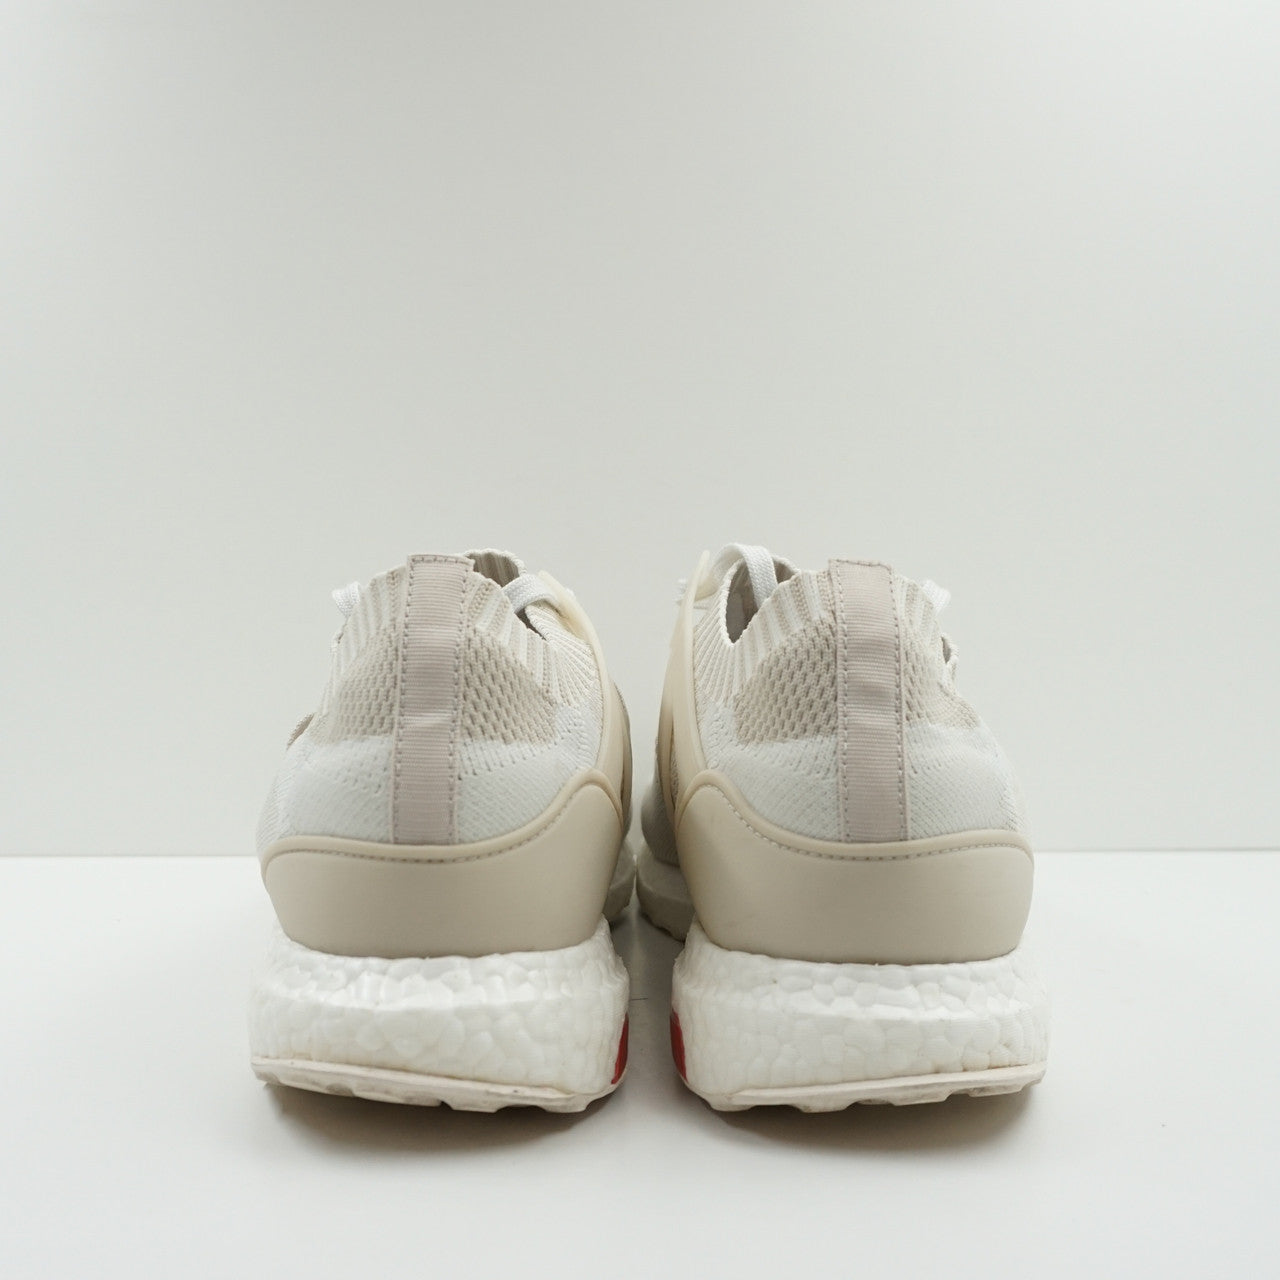 Adidas EQT Support Ultra Primeknit Materials White